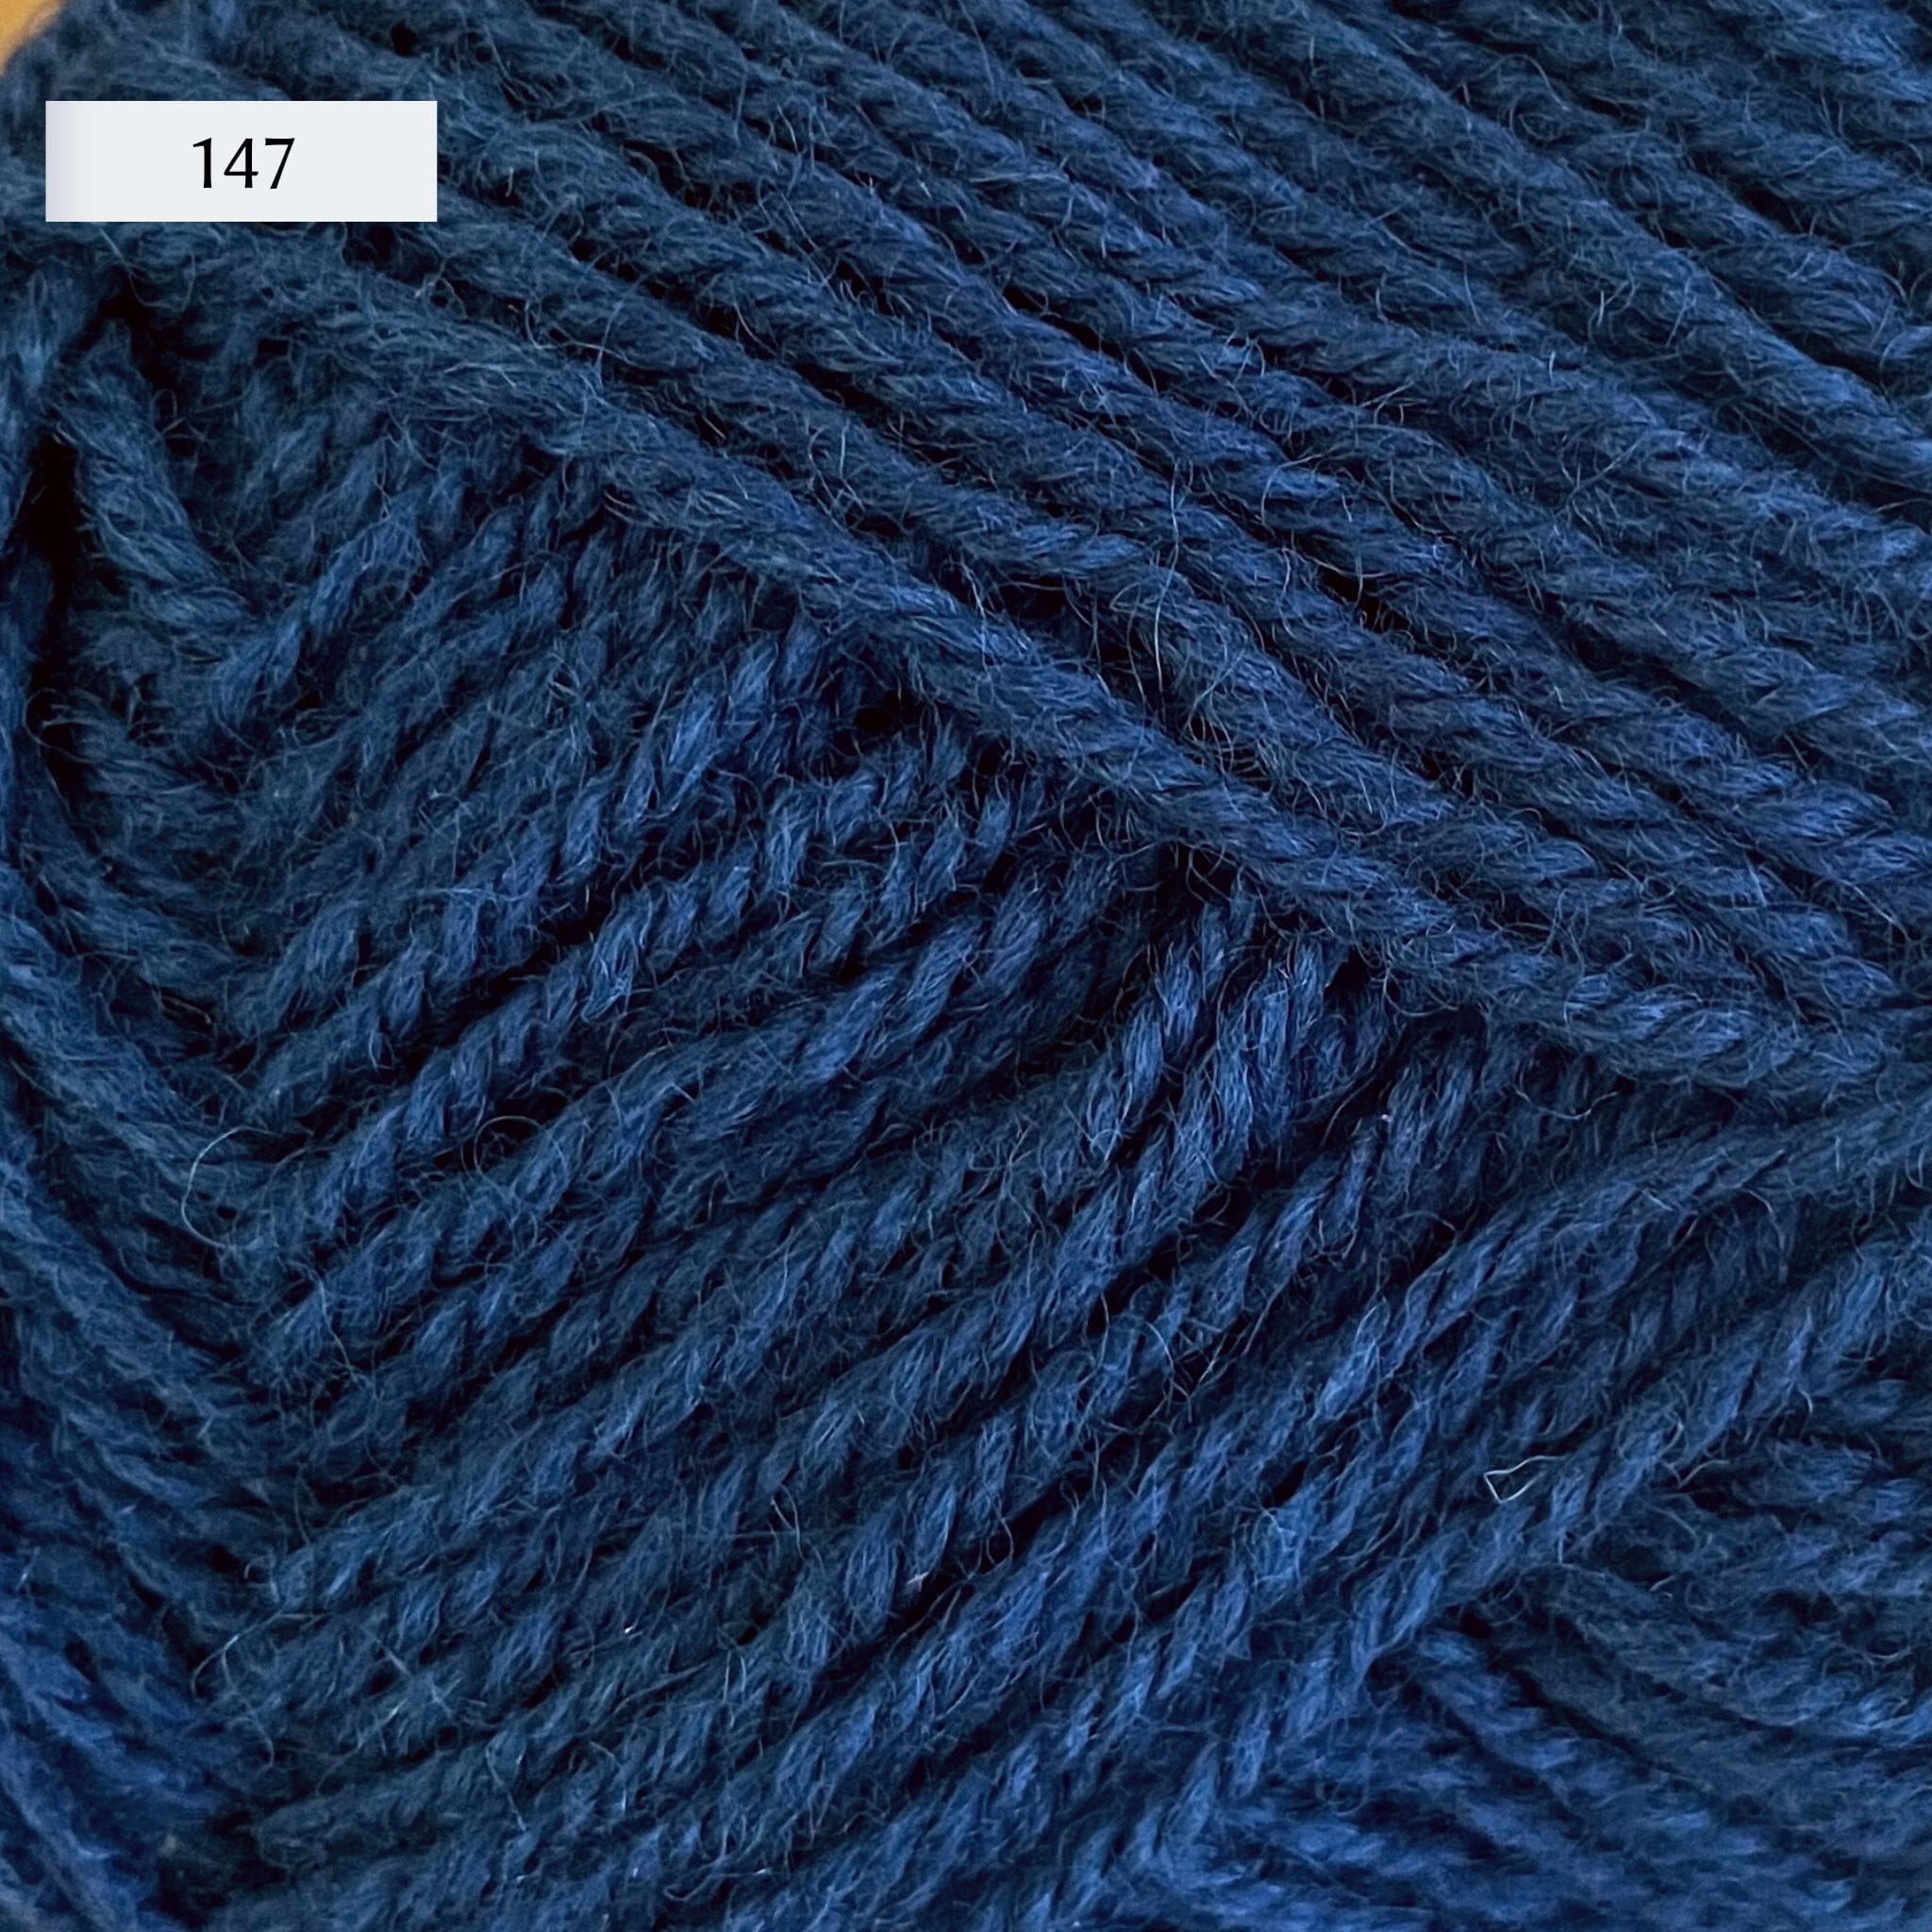 Rauma Strikkegarn, DK weight yarn, in color 147, deep denim blue